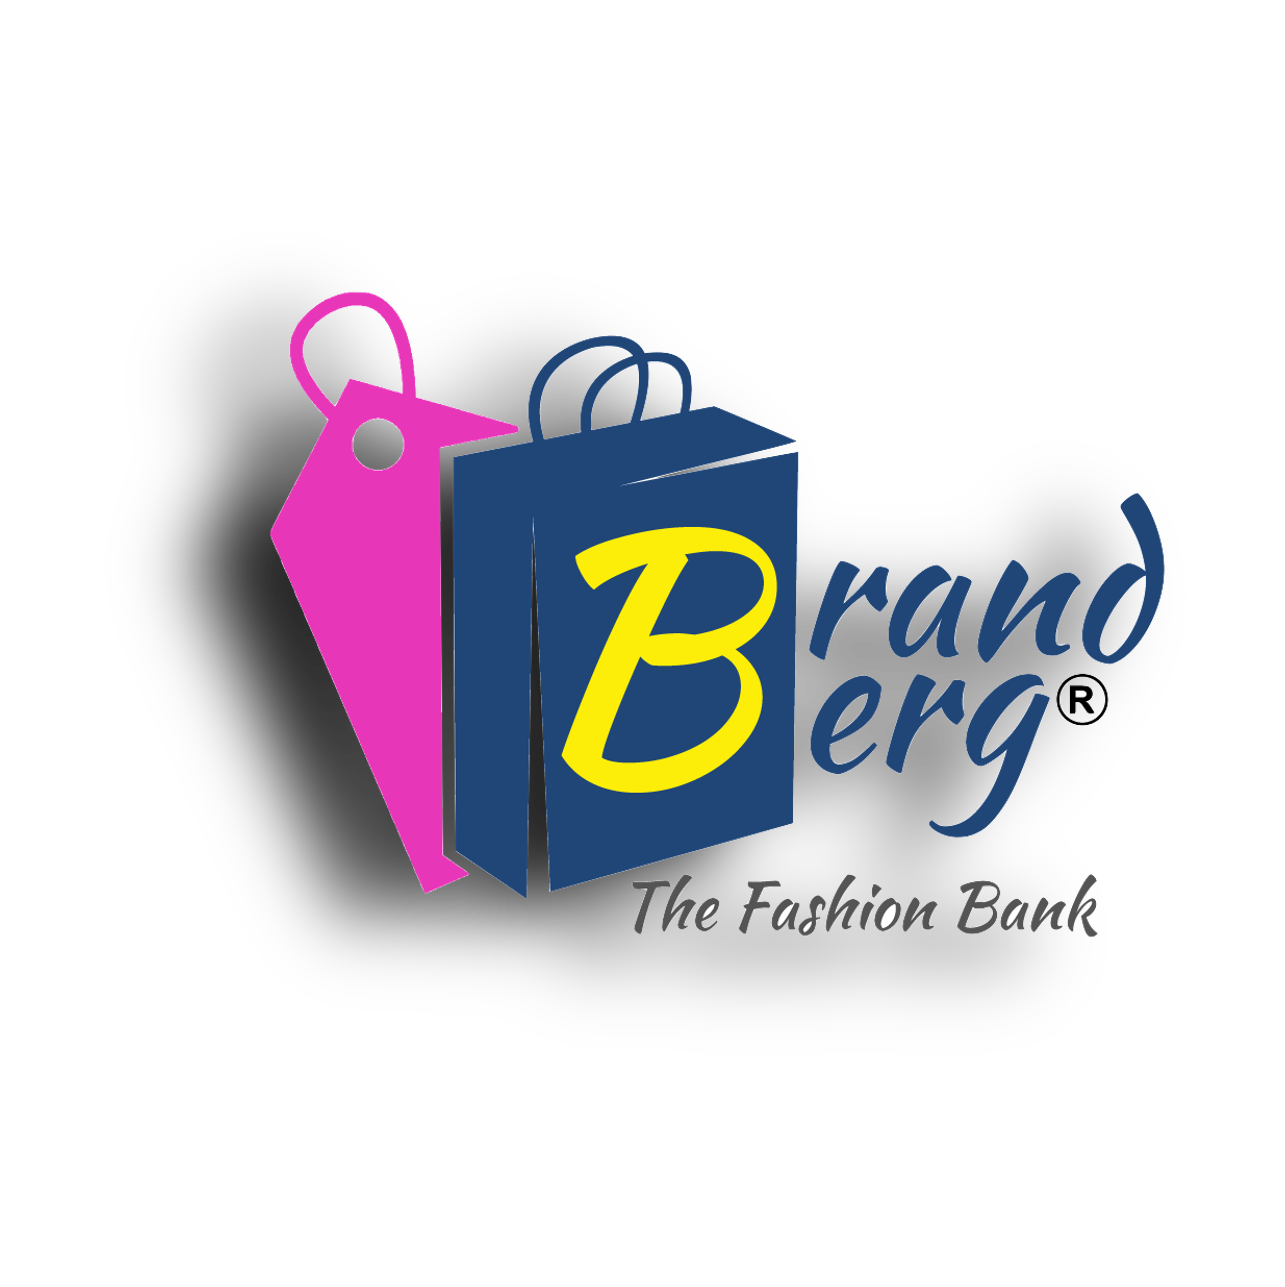 Brandberg - the fashion bank